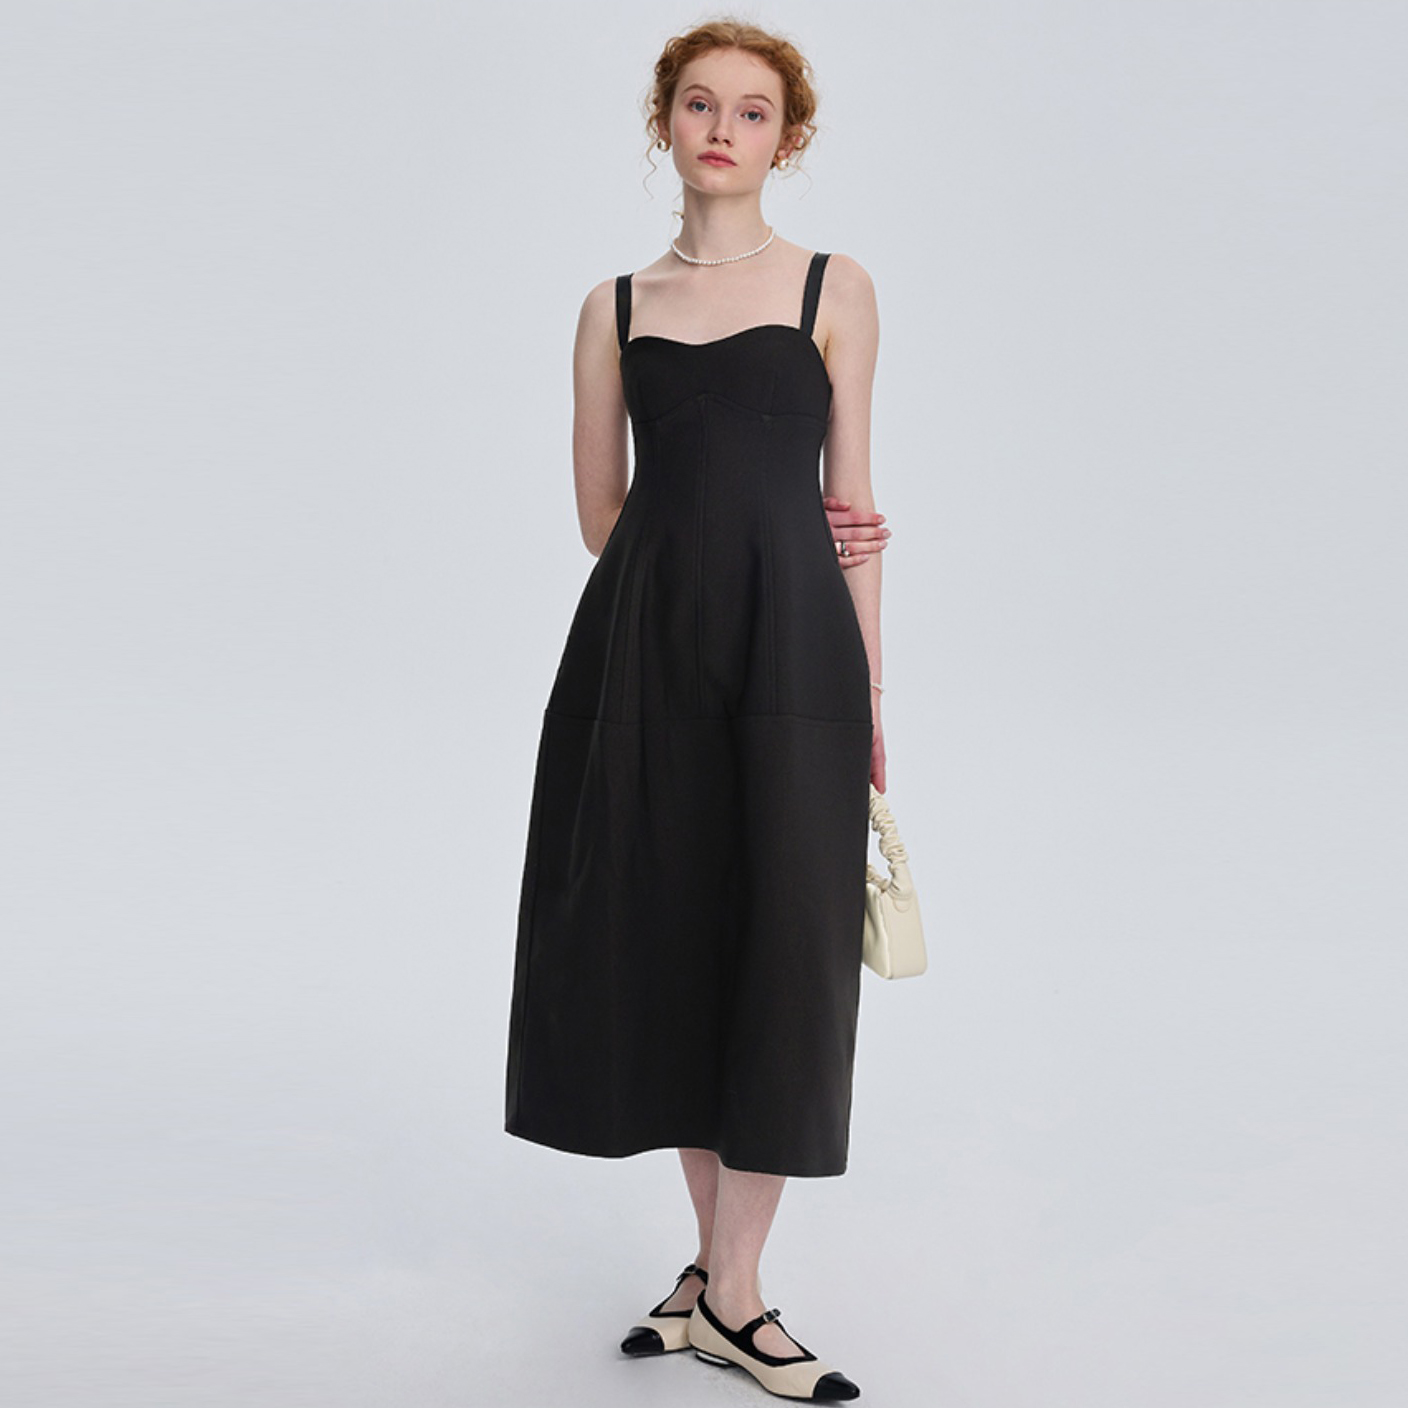 फ्रान्सेली कालो सस्पेन्डर सुरुचिपूर्ण पोशाक